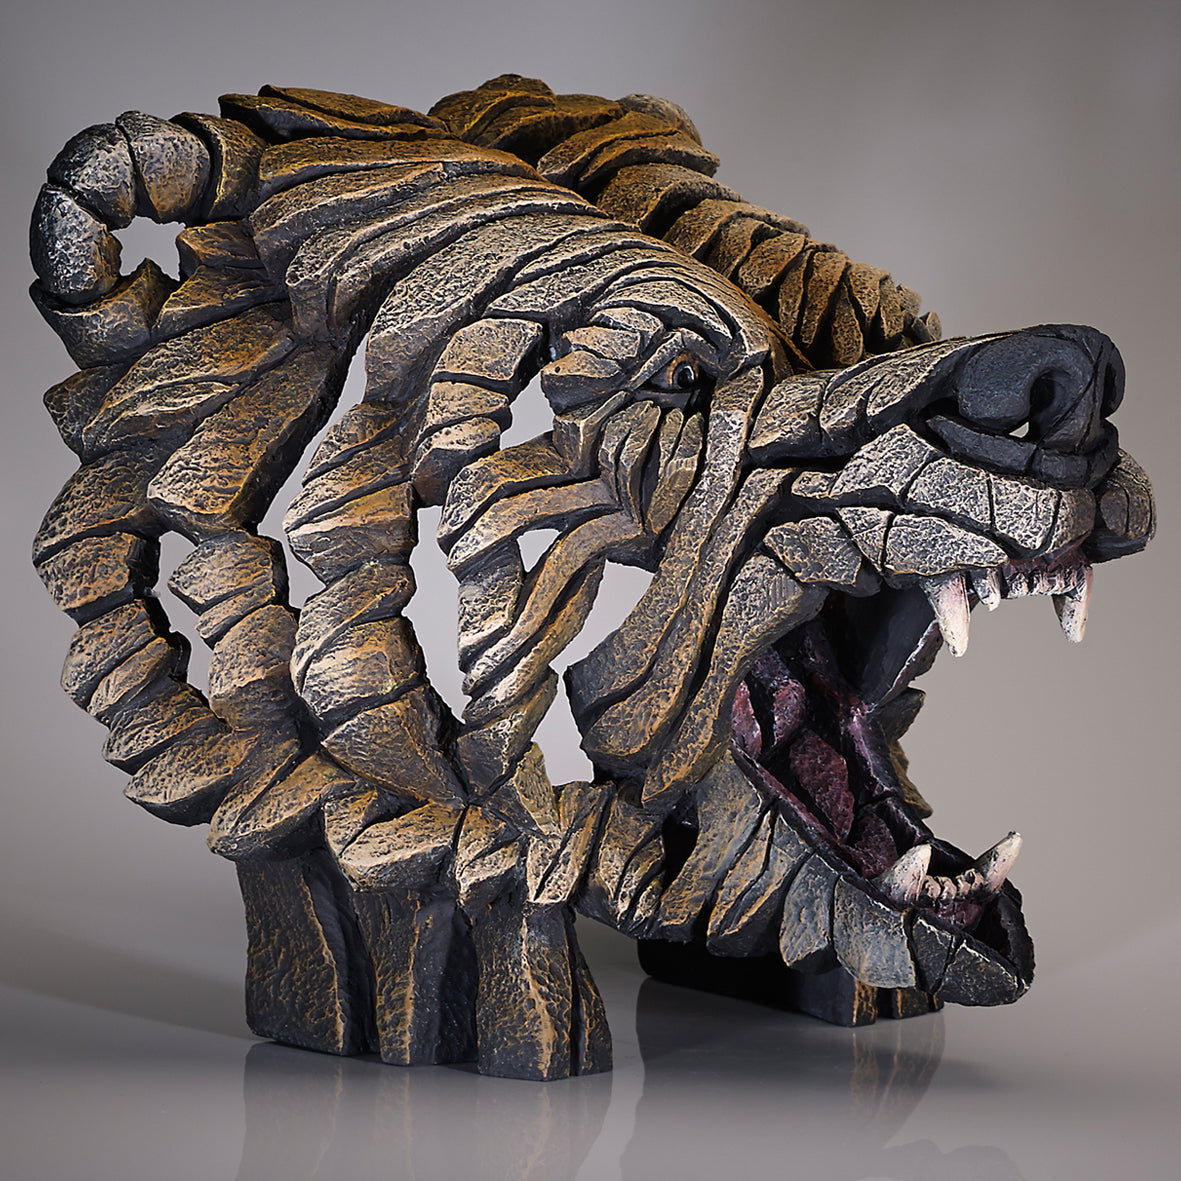 Grizzly Bear Bust from Edge Sculpture by Matt Buckley